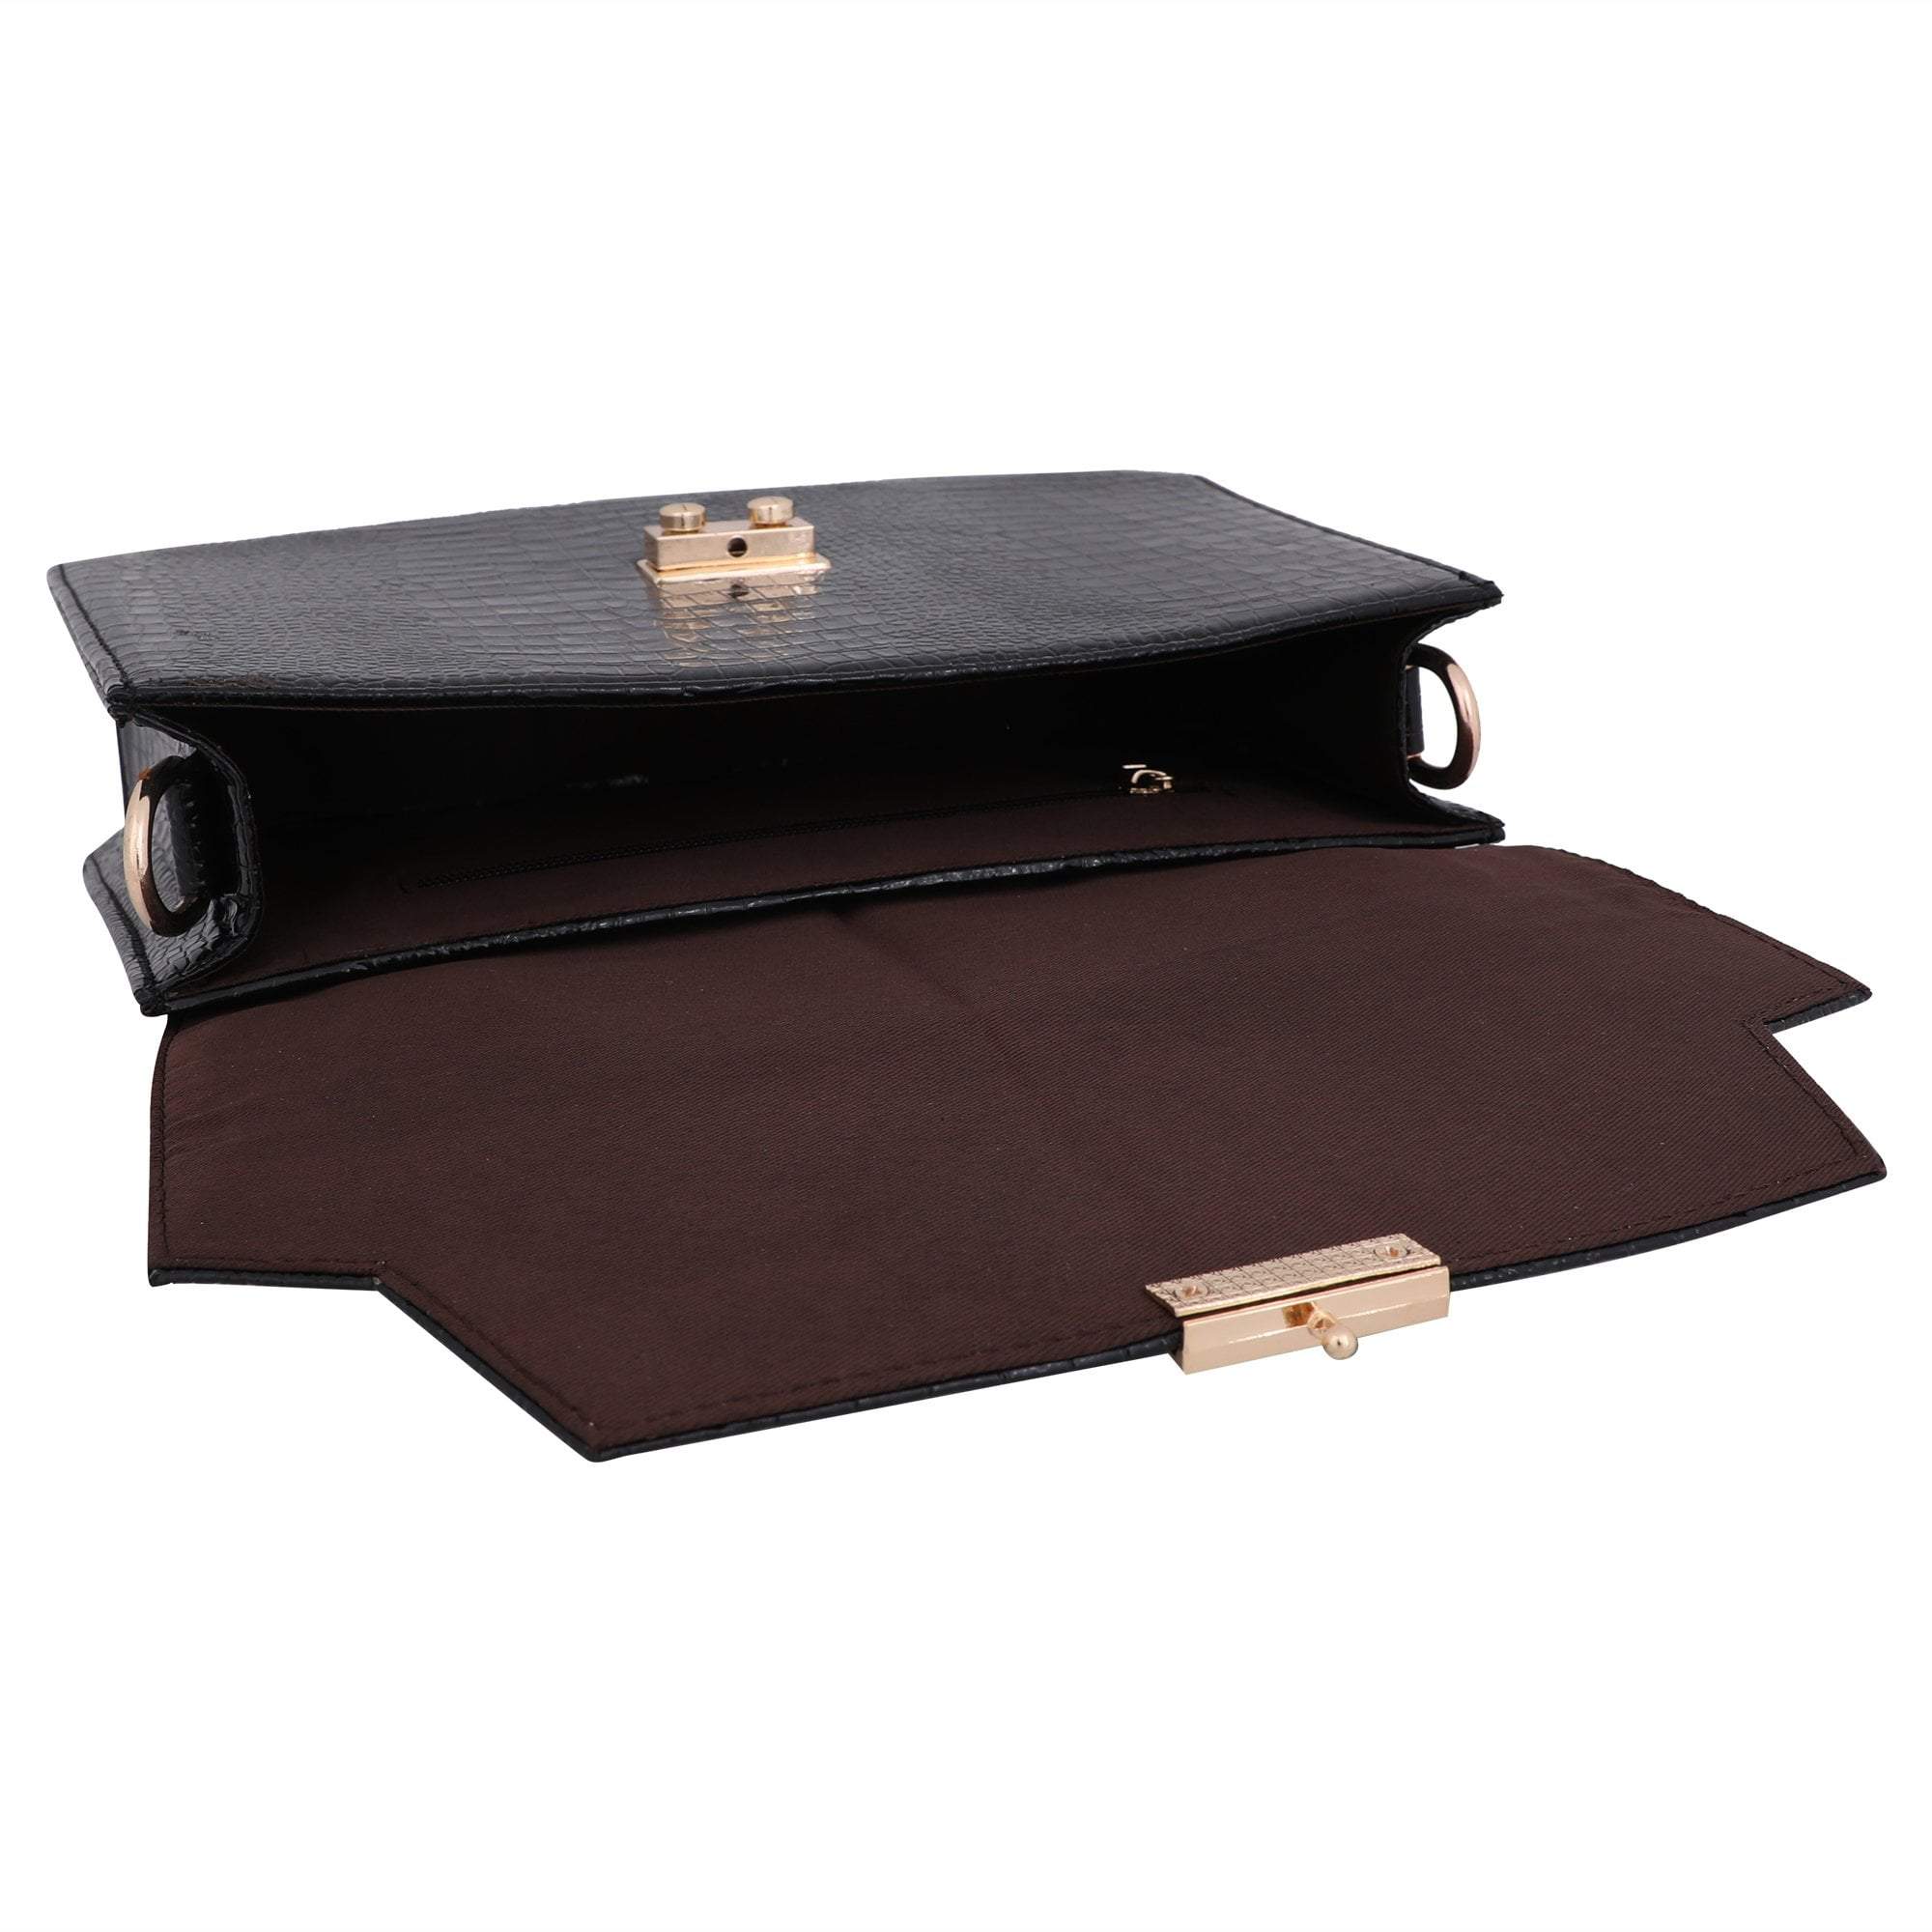 kinnoti Handbags Vegan Croco Leather Satchel Hand Bag